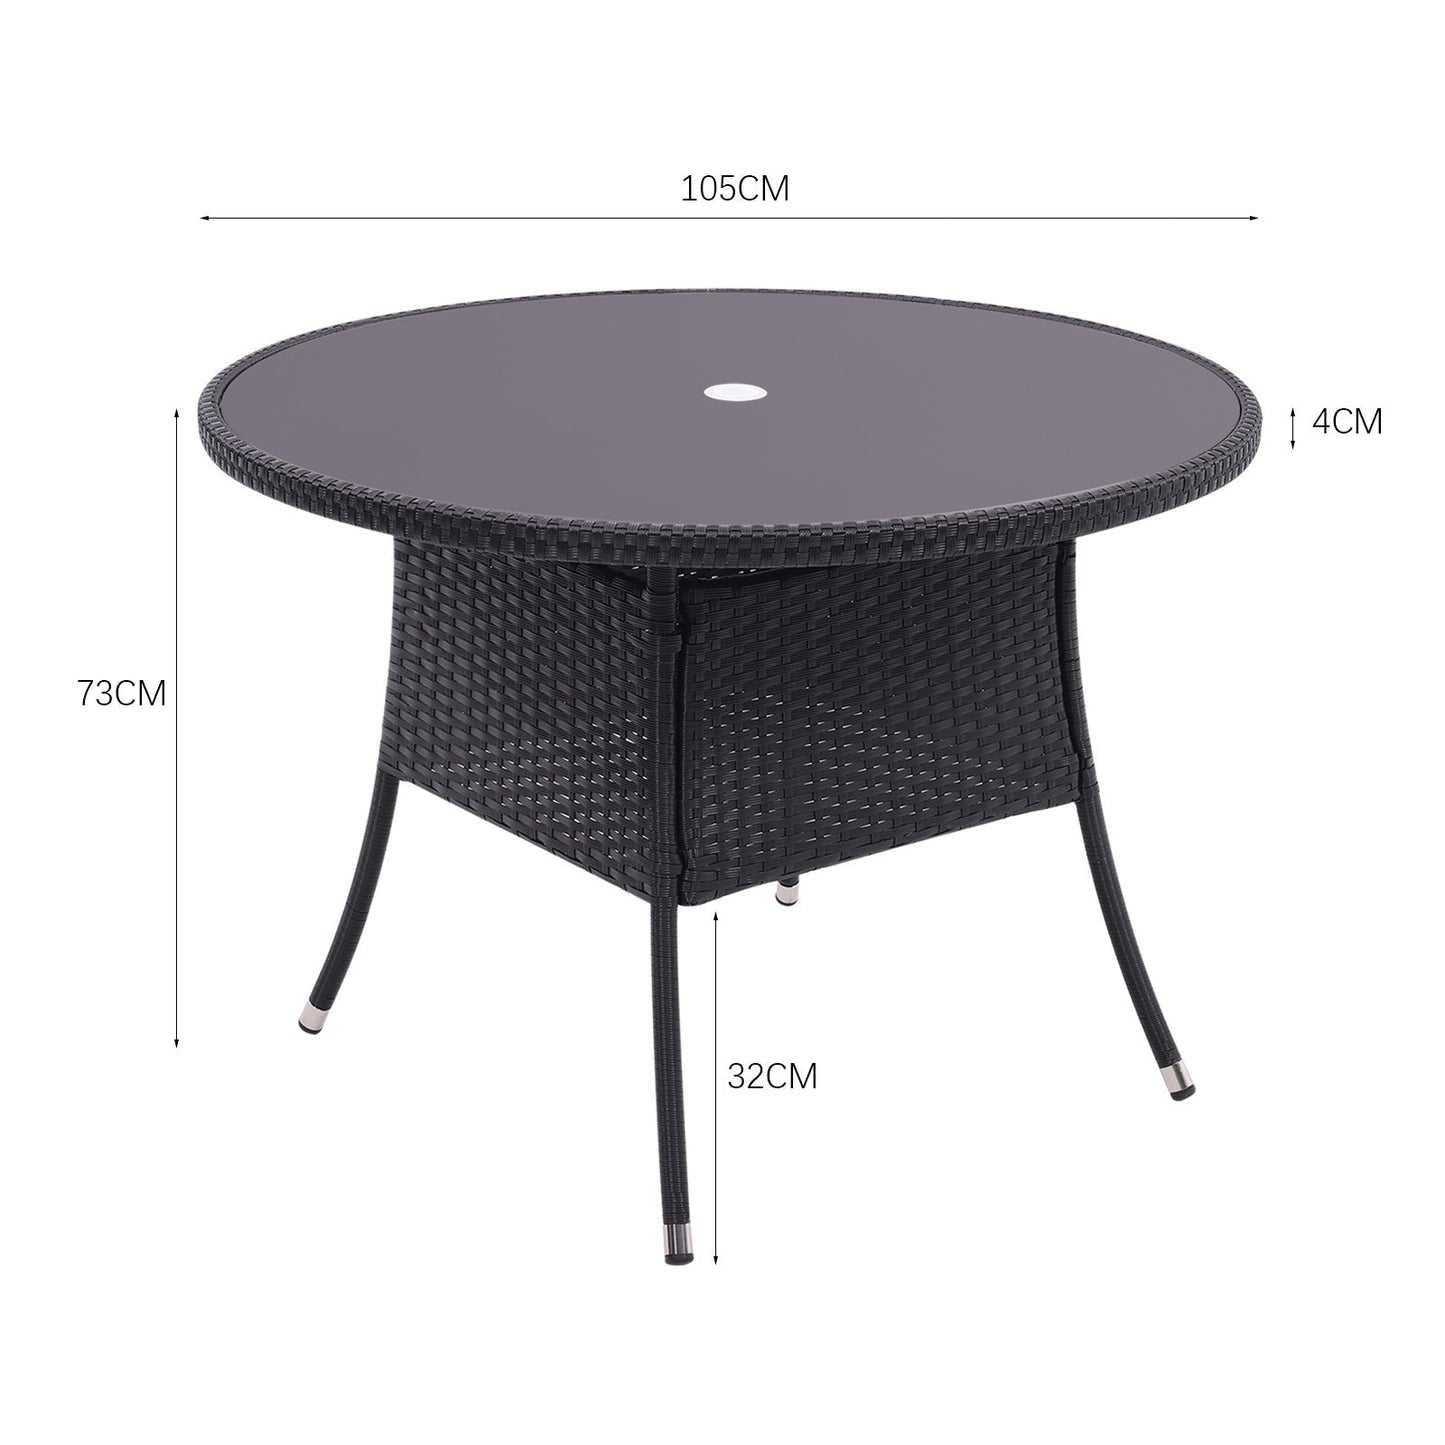 105cm Round/ Square Coffee Table Bistro Outdoor Garden Patio Tables & Parasol Hole Garden Dining Table   